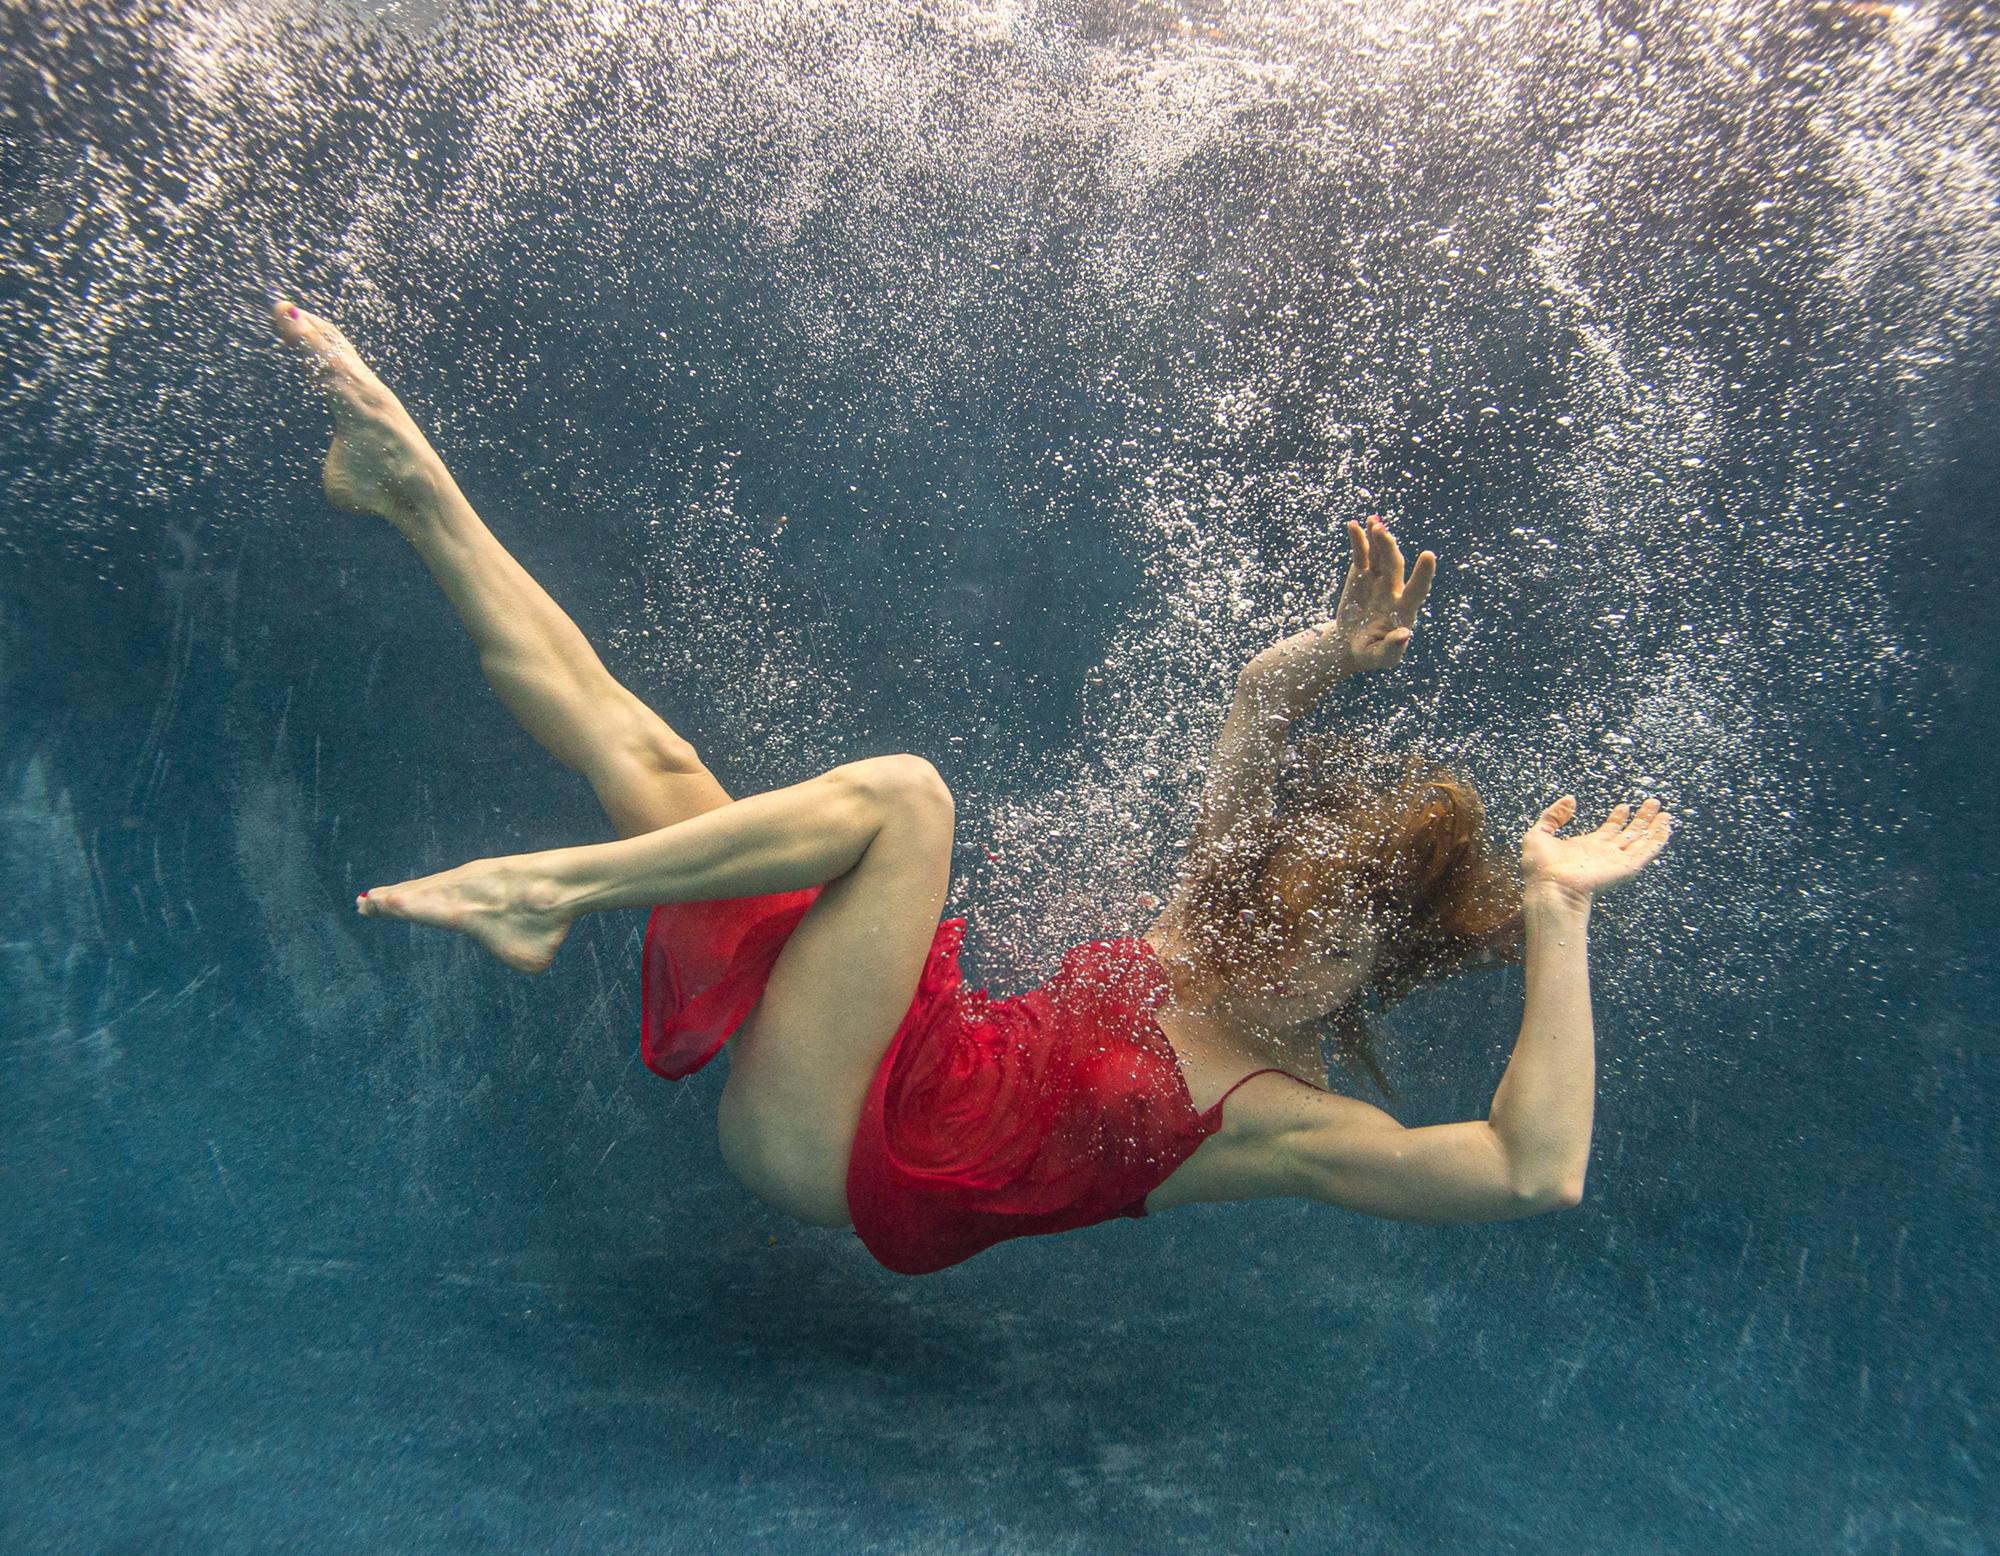 Alex Sher Color Photograph - Blue Fall - underwater photograph - archival pigment print 18x24"